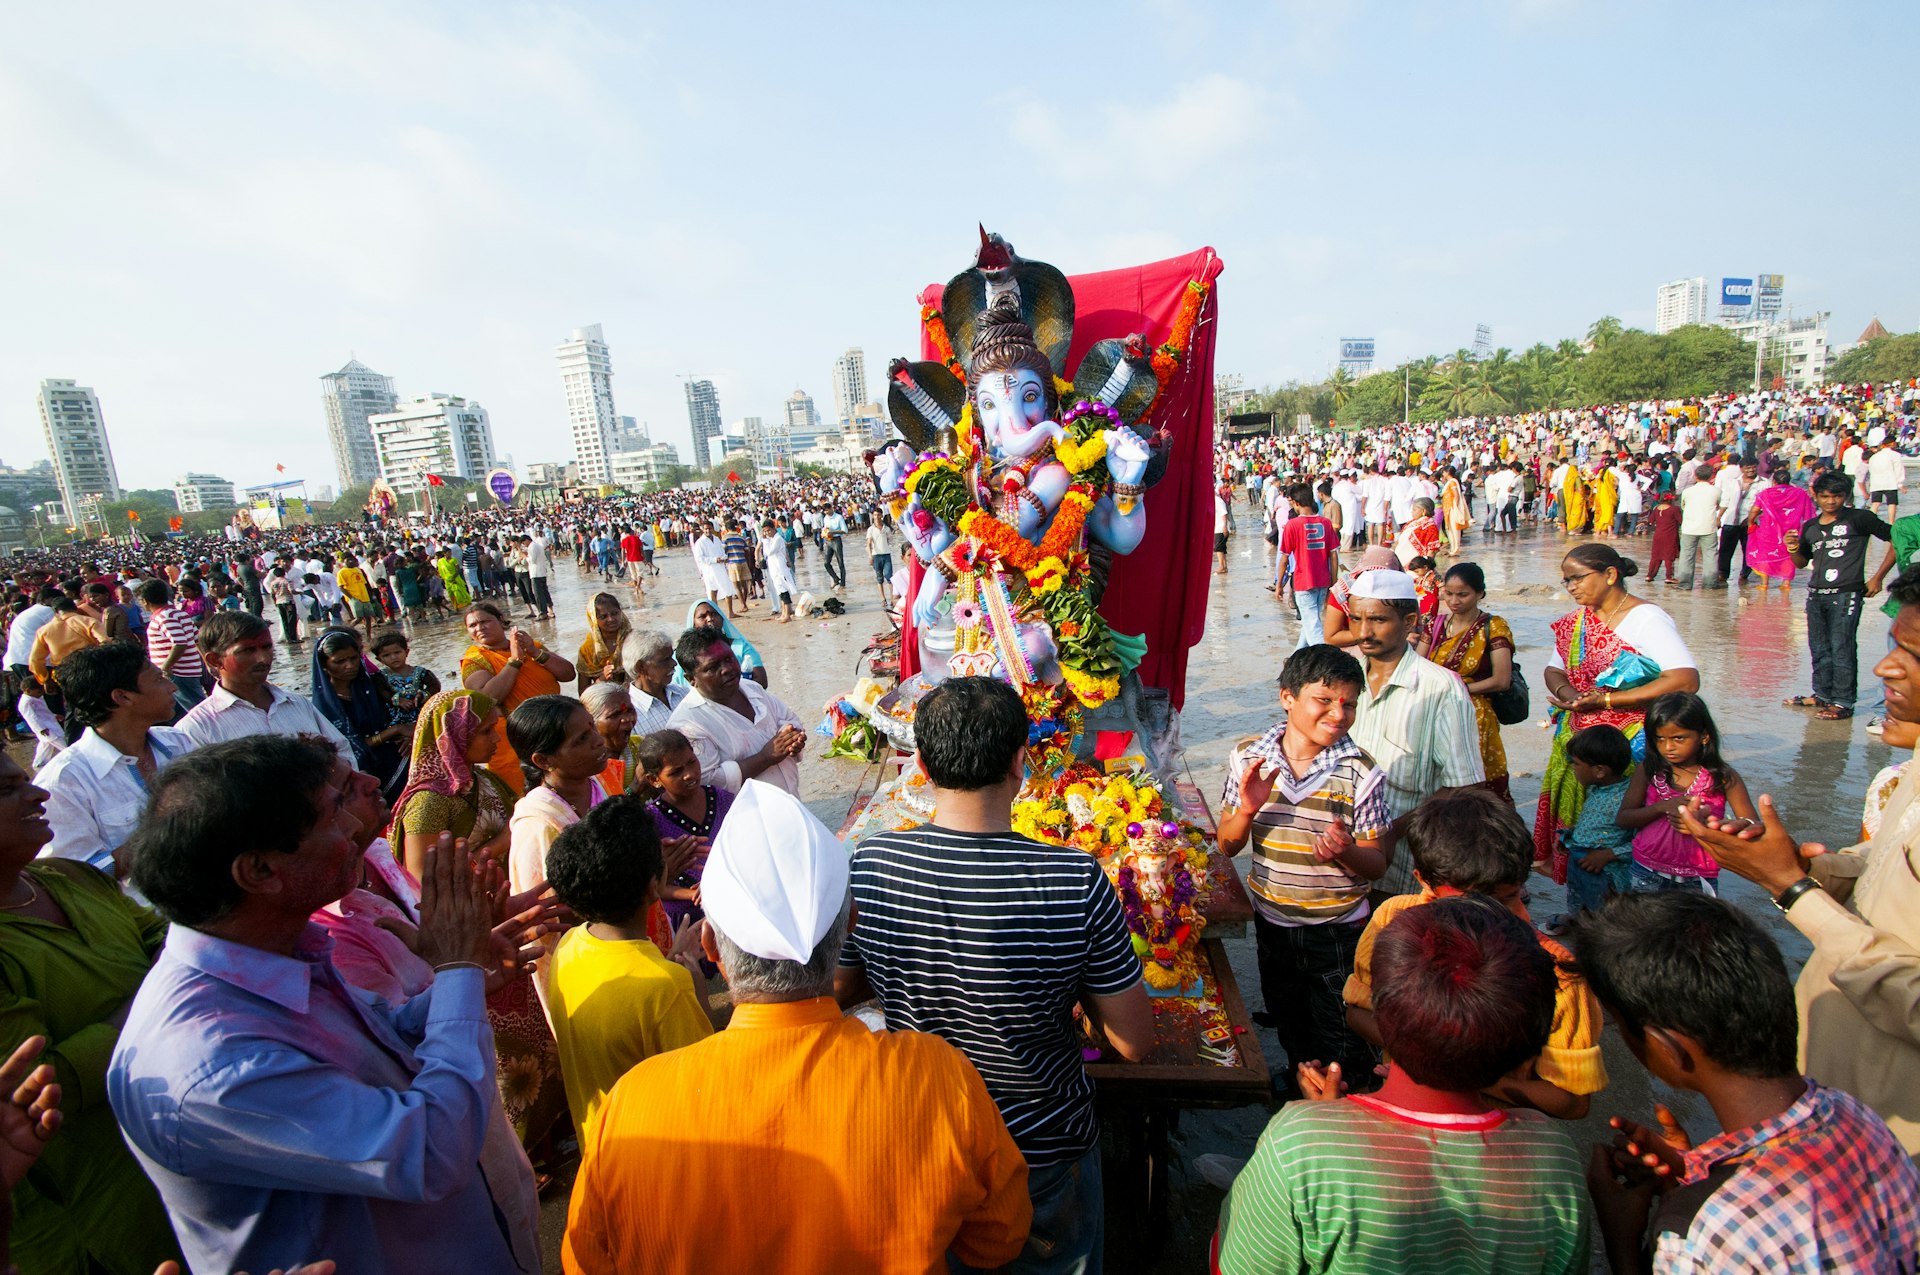 Devotees celebrate the festival of Ganesh Chaturthi at Girgaum Chowpatty beach